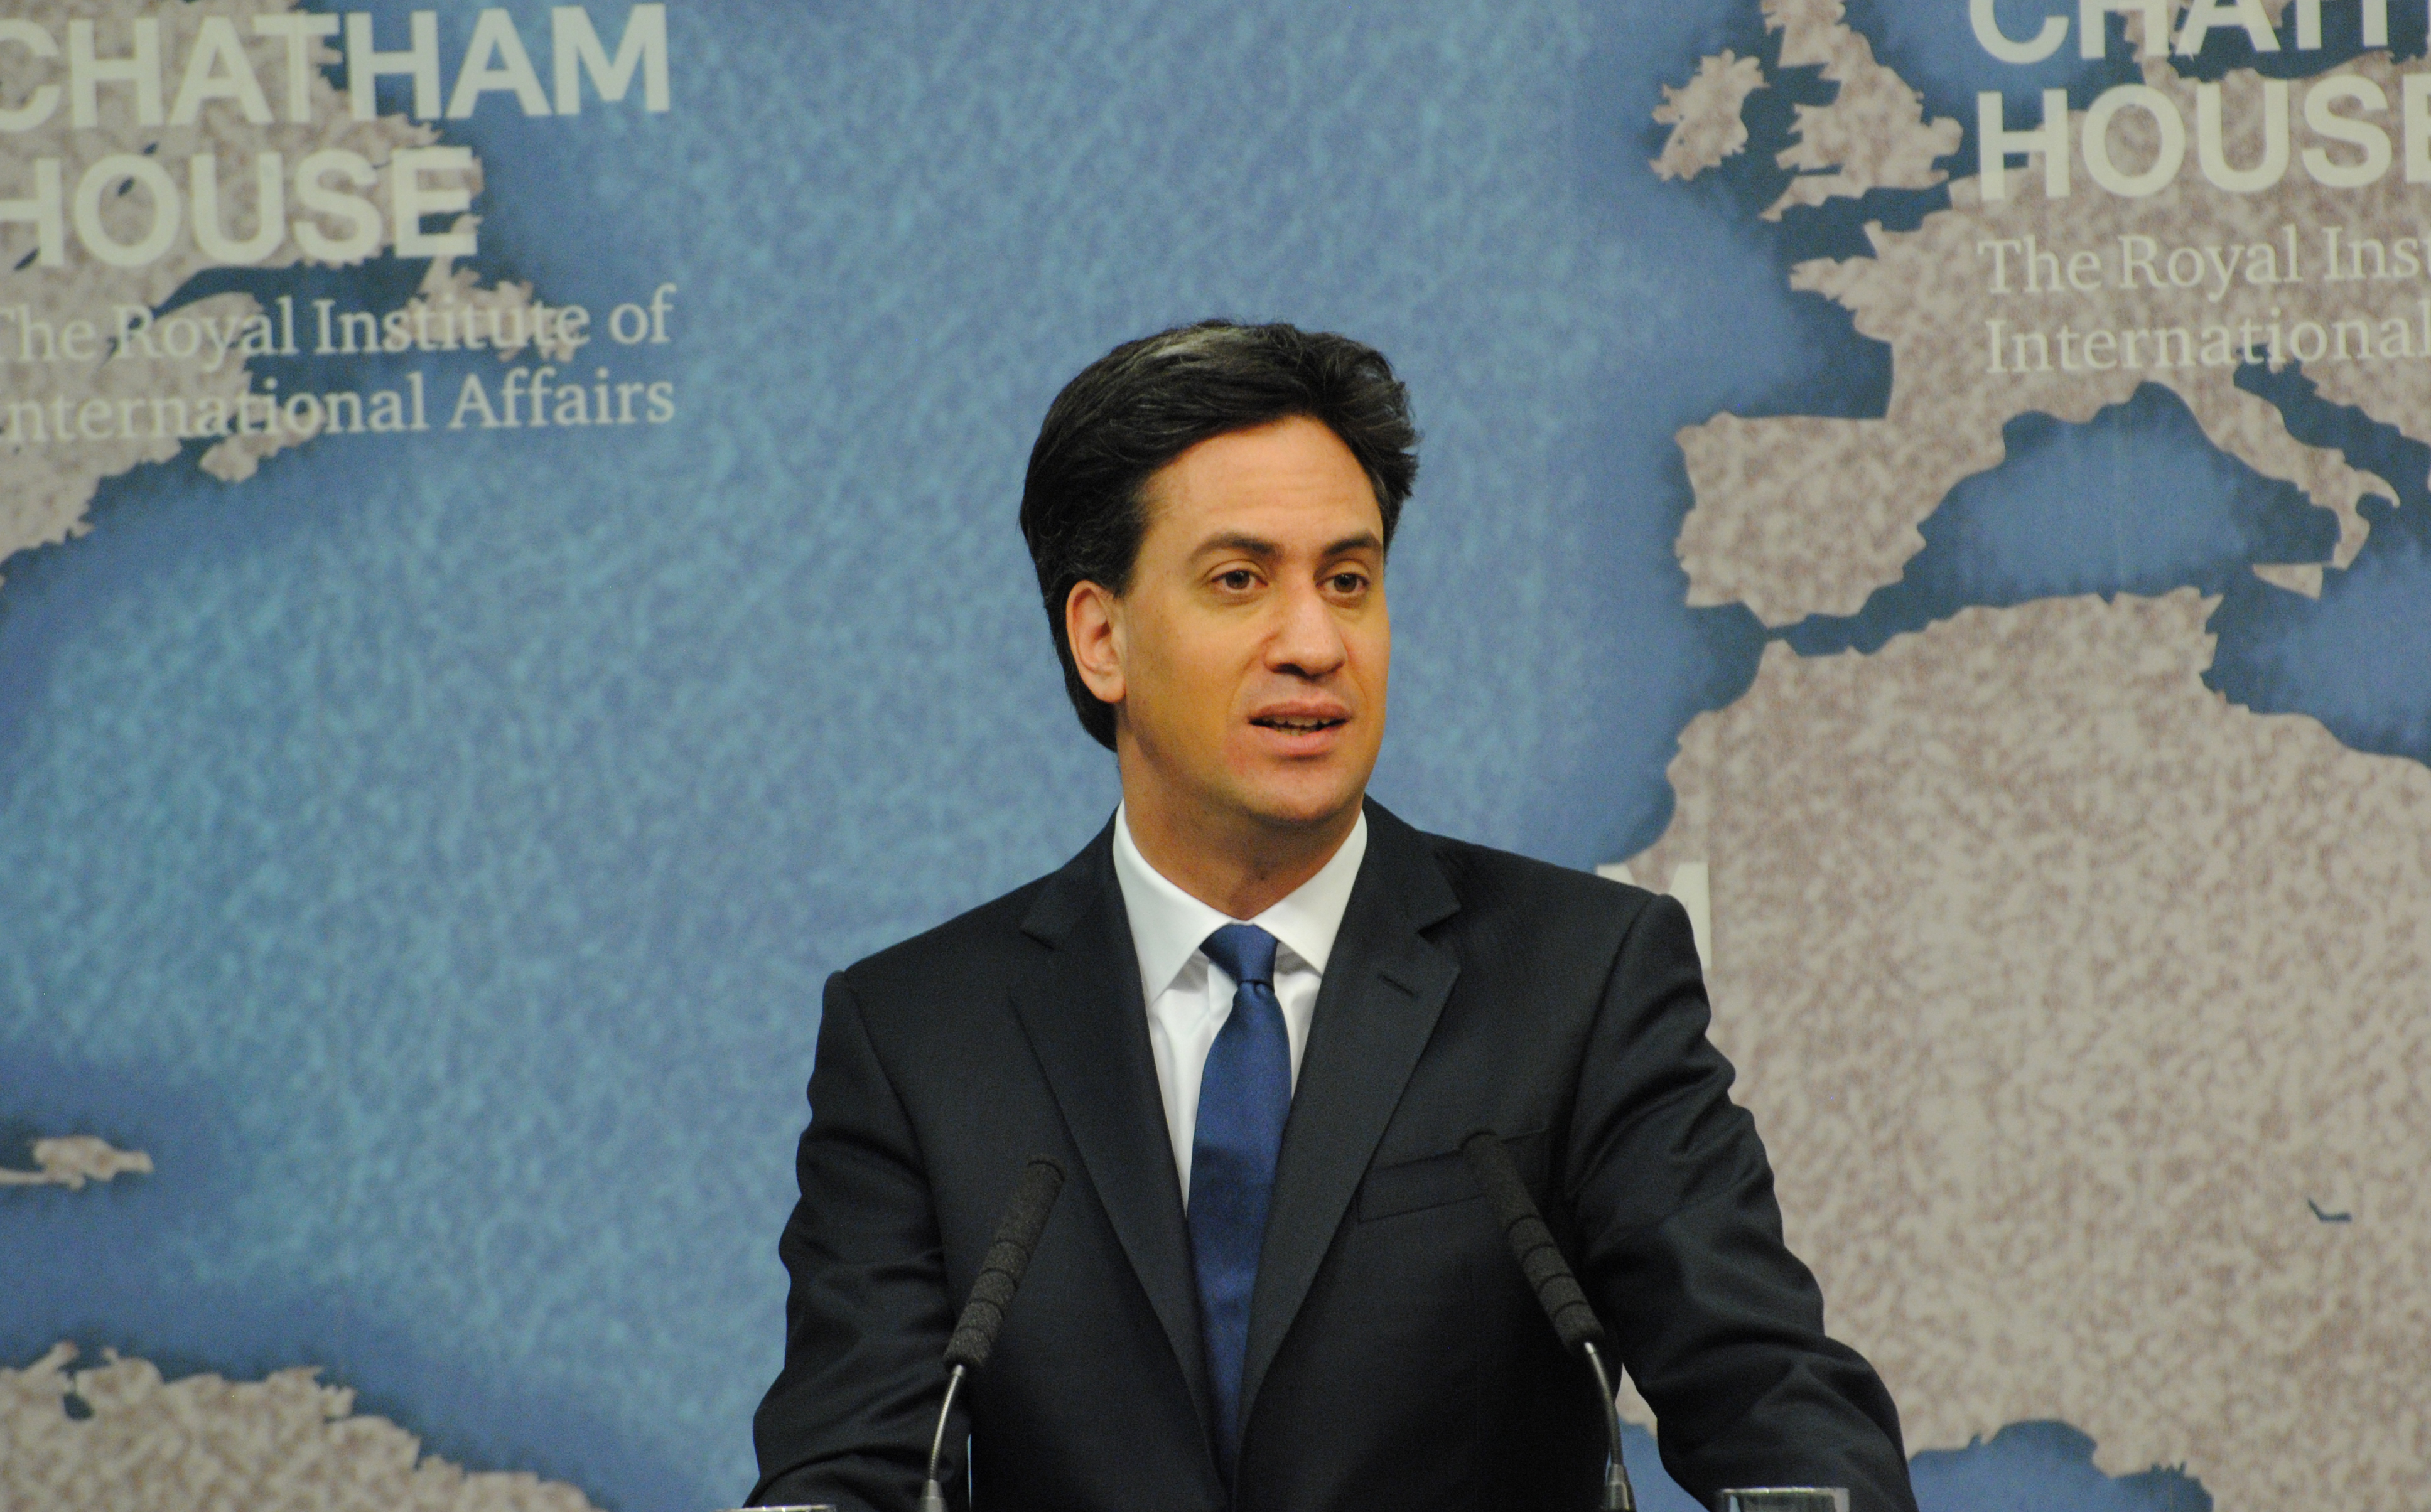 Shadow Cabinet Of Ed Miliband Wikipedia